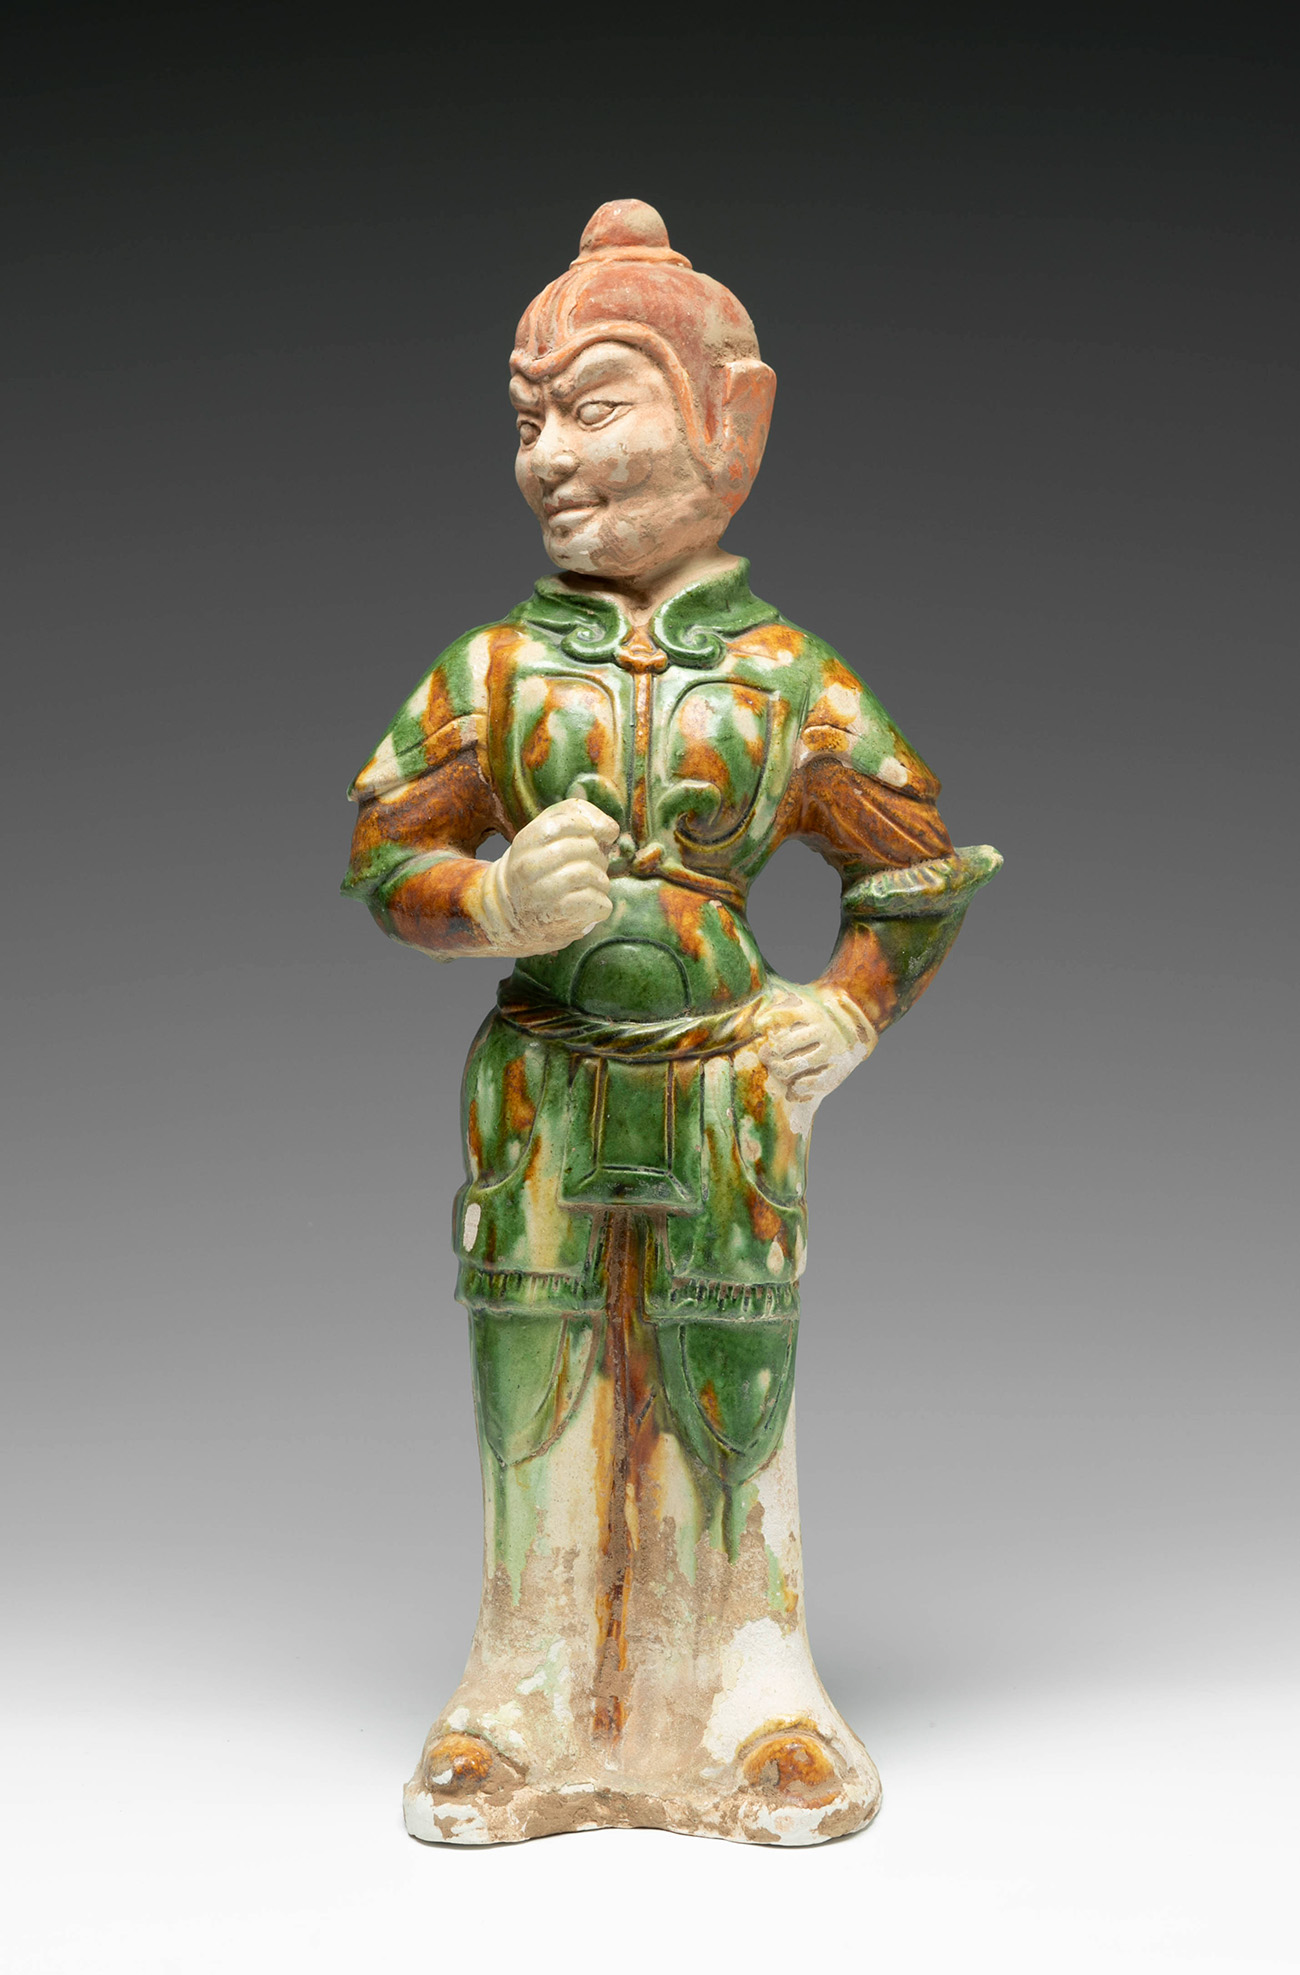 Lokapala; China, Tang dynasty, AD 617 - 907.Terracotta with Sancai glaze.Certificate of analysis